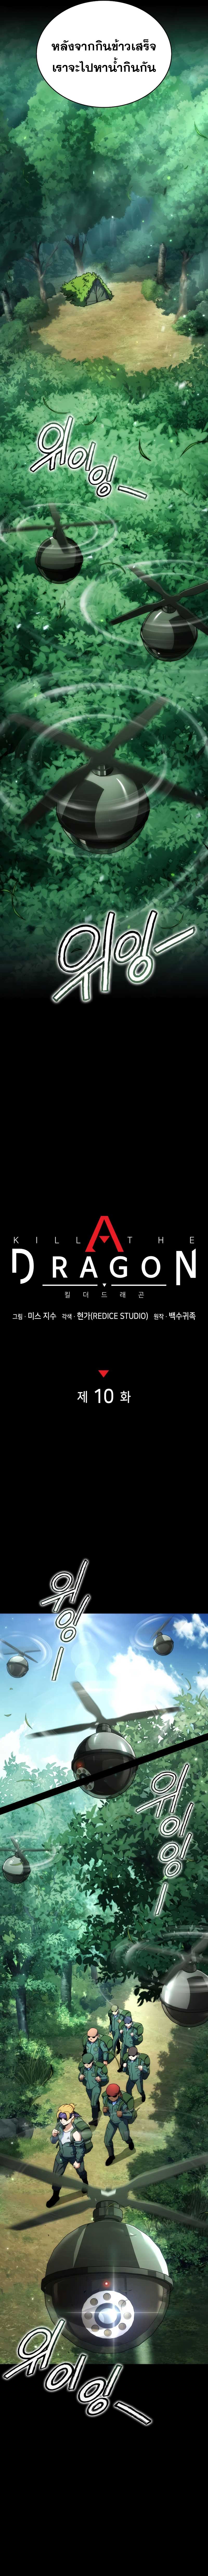 Kill The Dragon10 04